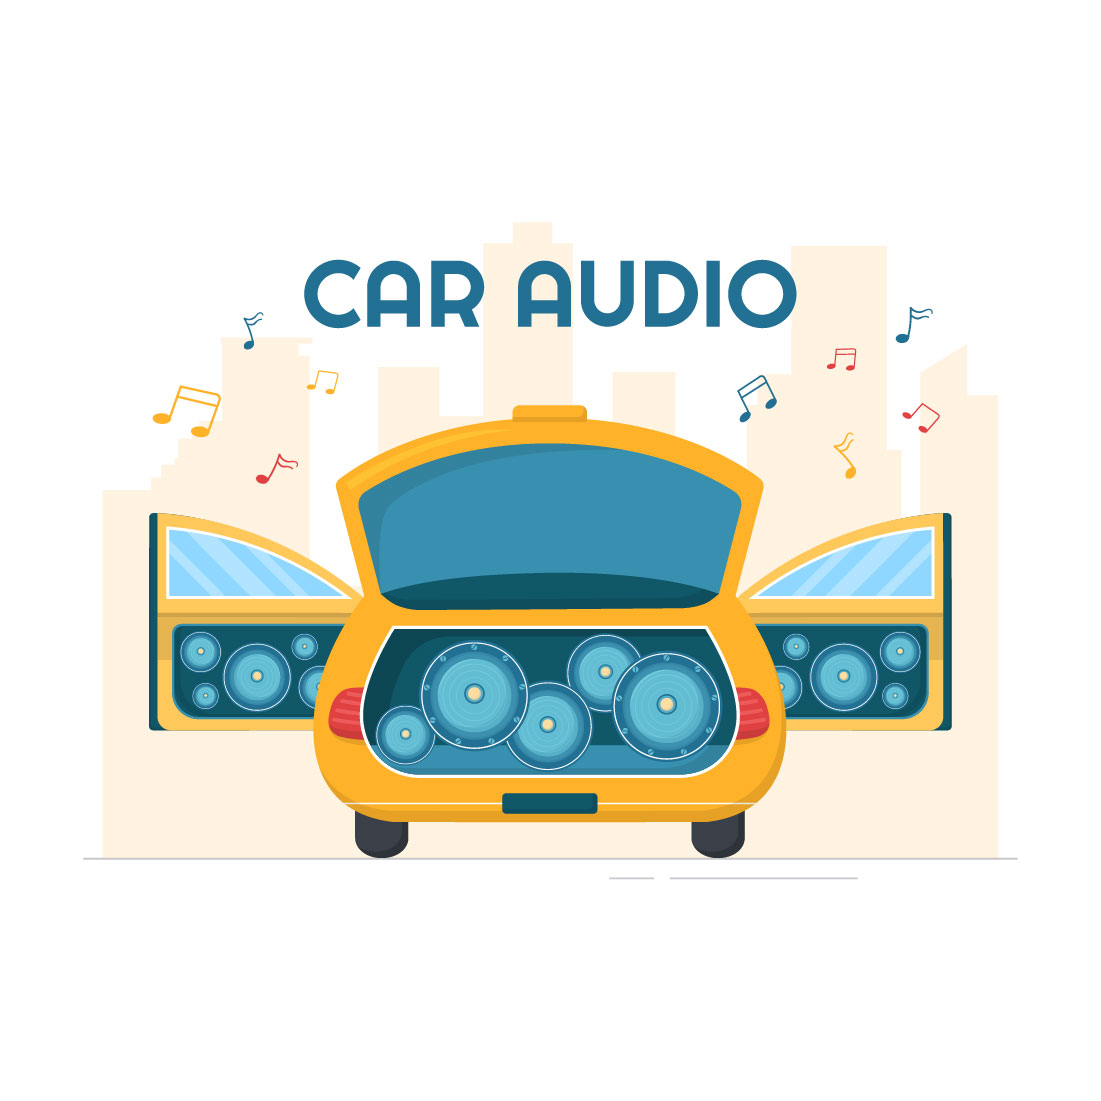 Car Audio Illustration cover image.